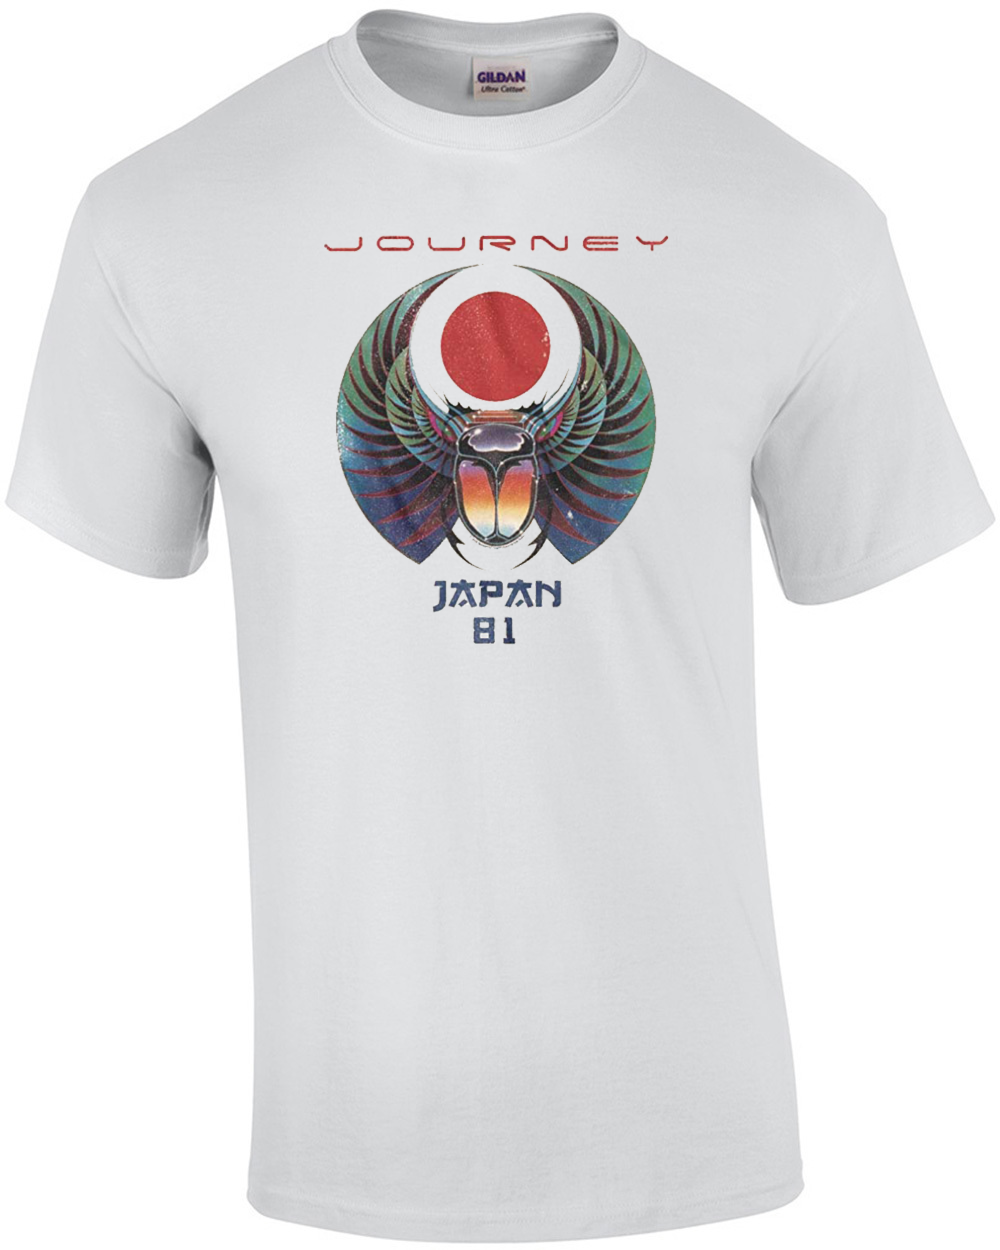 journey japan shirt